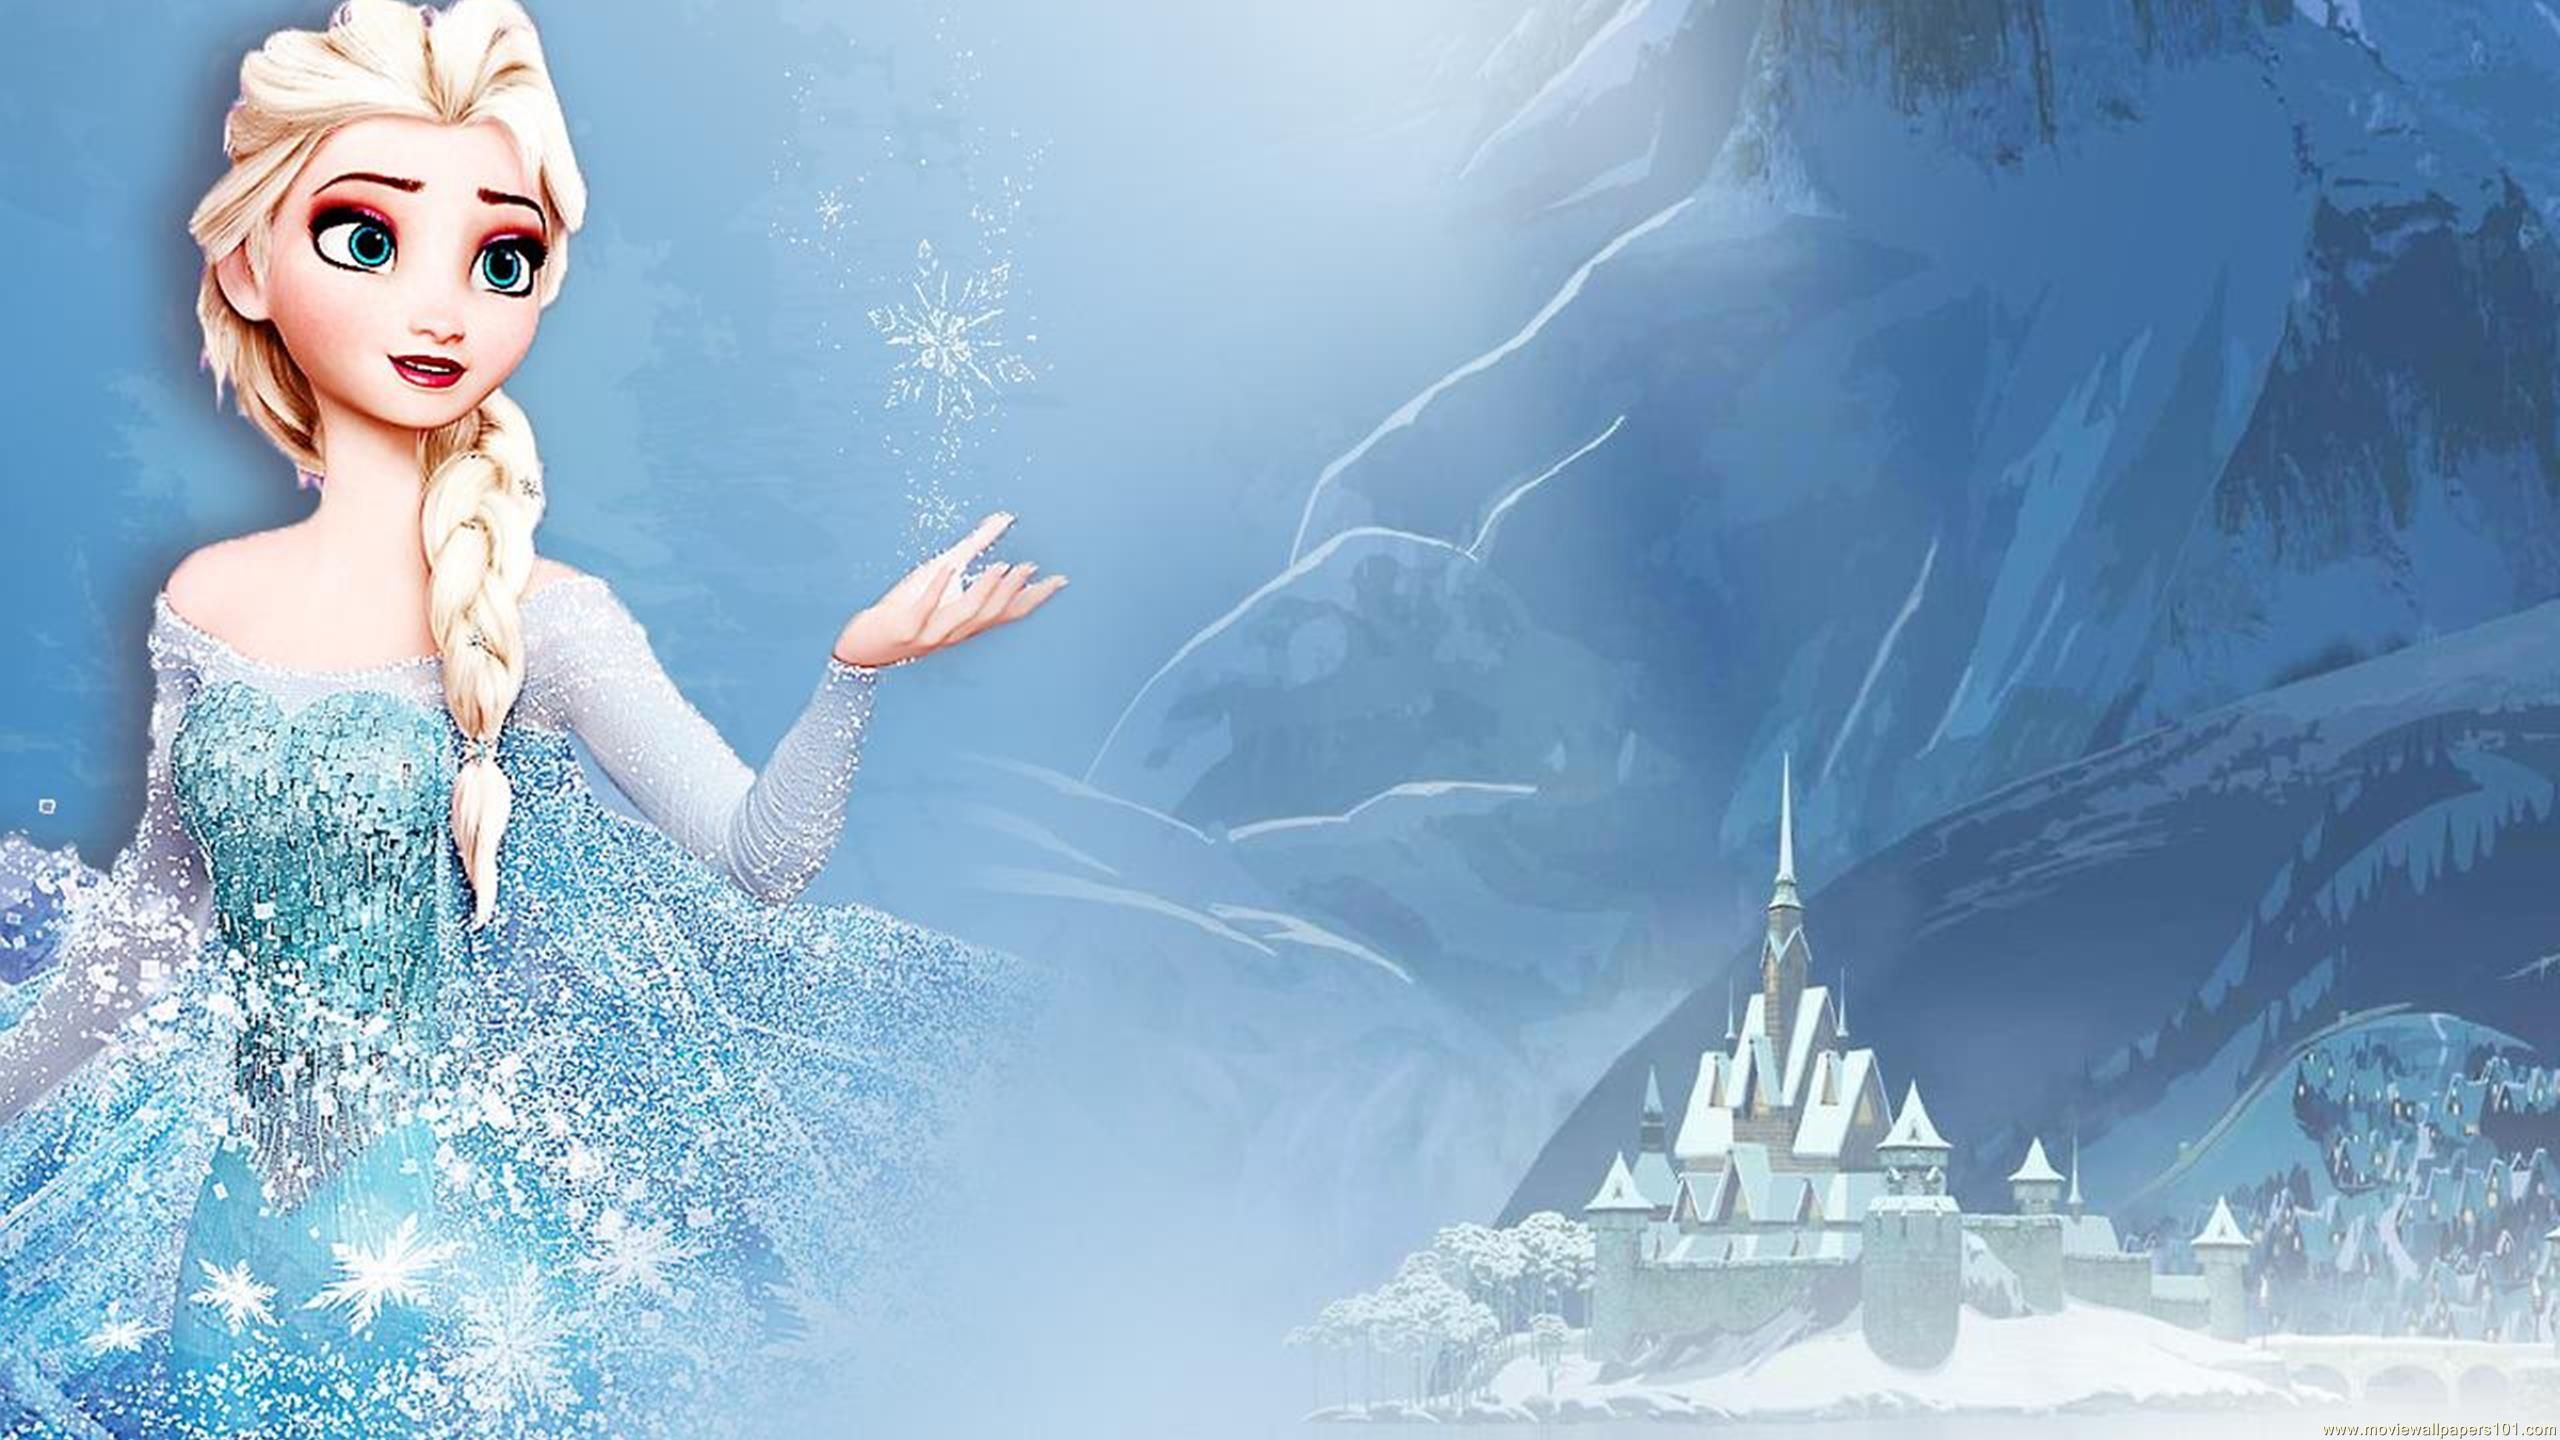 Free download Anime Frozen wallpaper Elsa frozen [2560x1440] for your Desktop, Mobile & Tablet. Explore Frozen Wallpaper. Frozen Wallpaper, Frozen Wallpaper, Frozen Wallpaper Disney